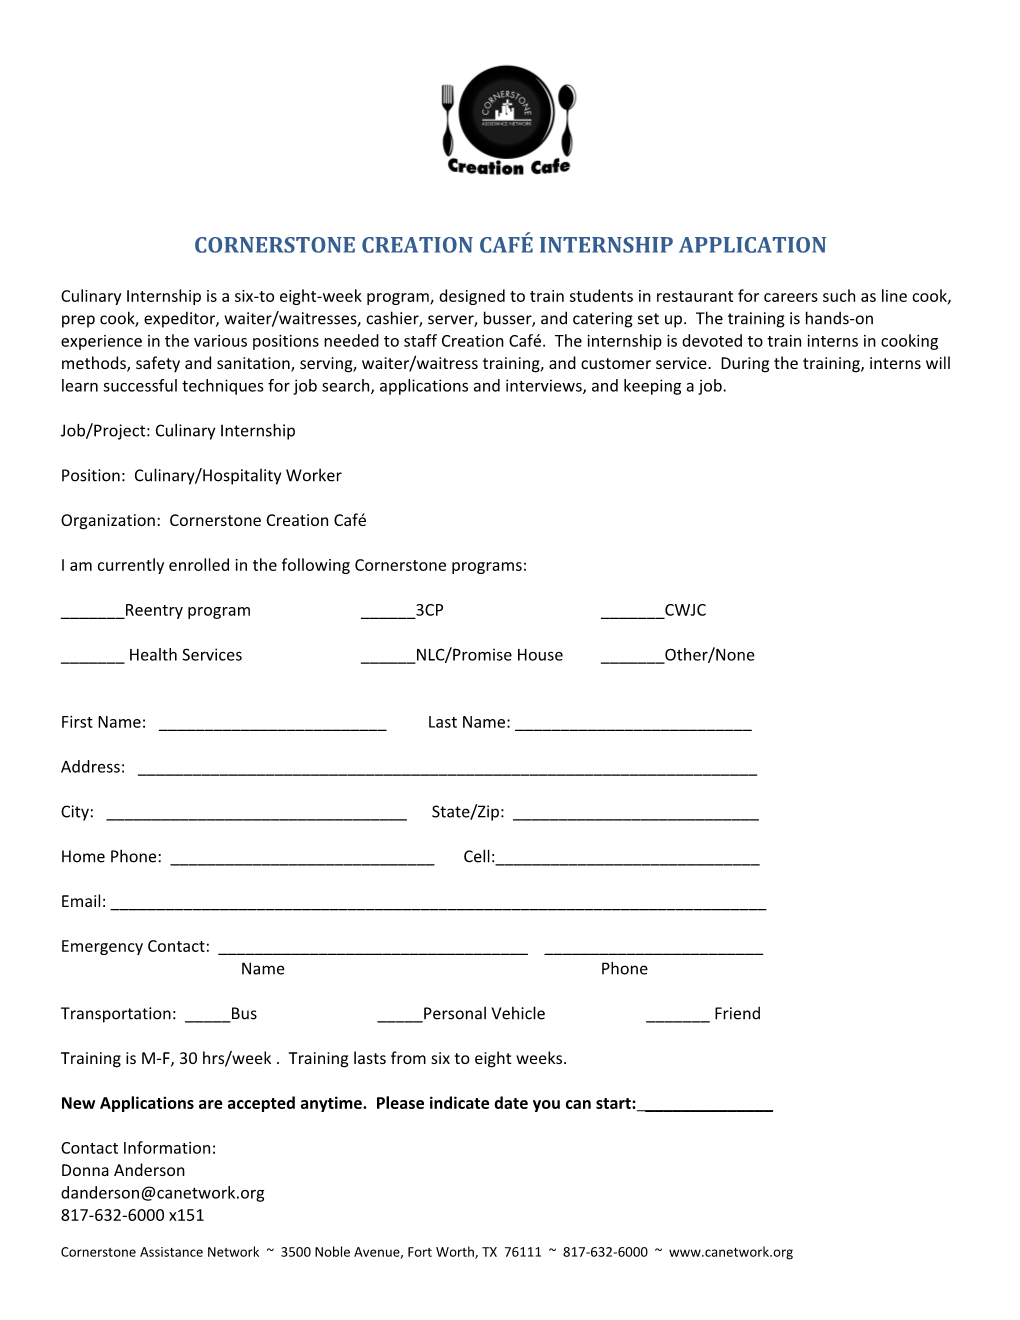 Cornerstone Creation Café Internship Application